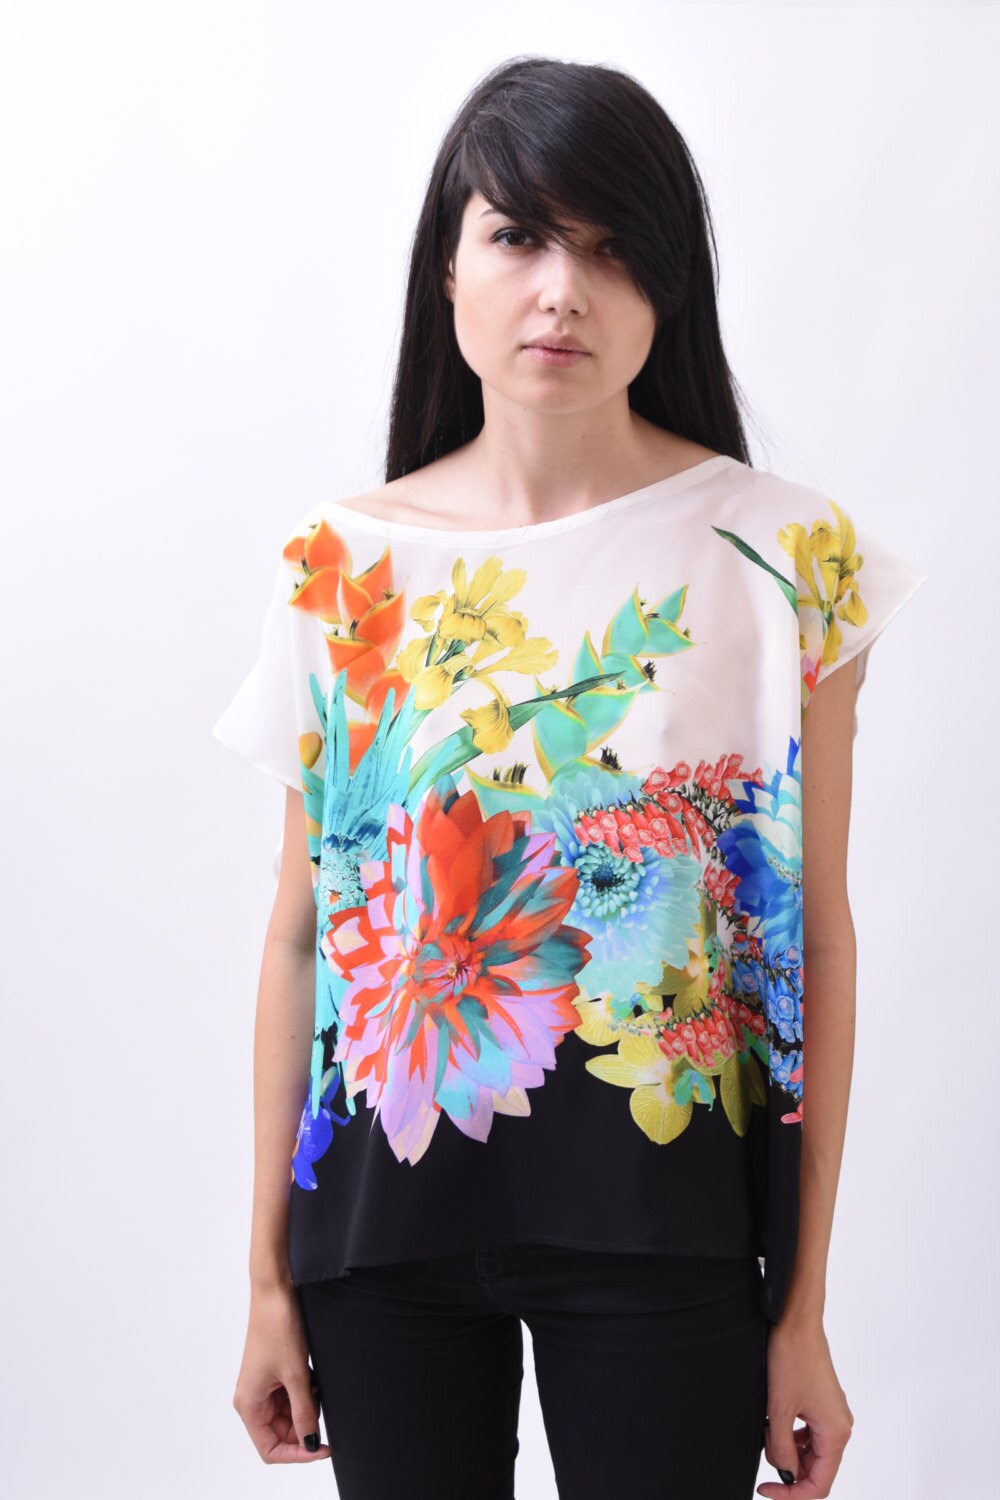 Floral print shirt silk blouse summer top flower print | Etsy